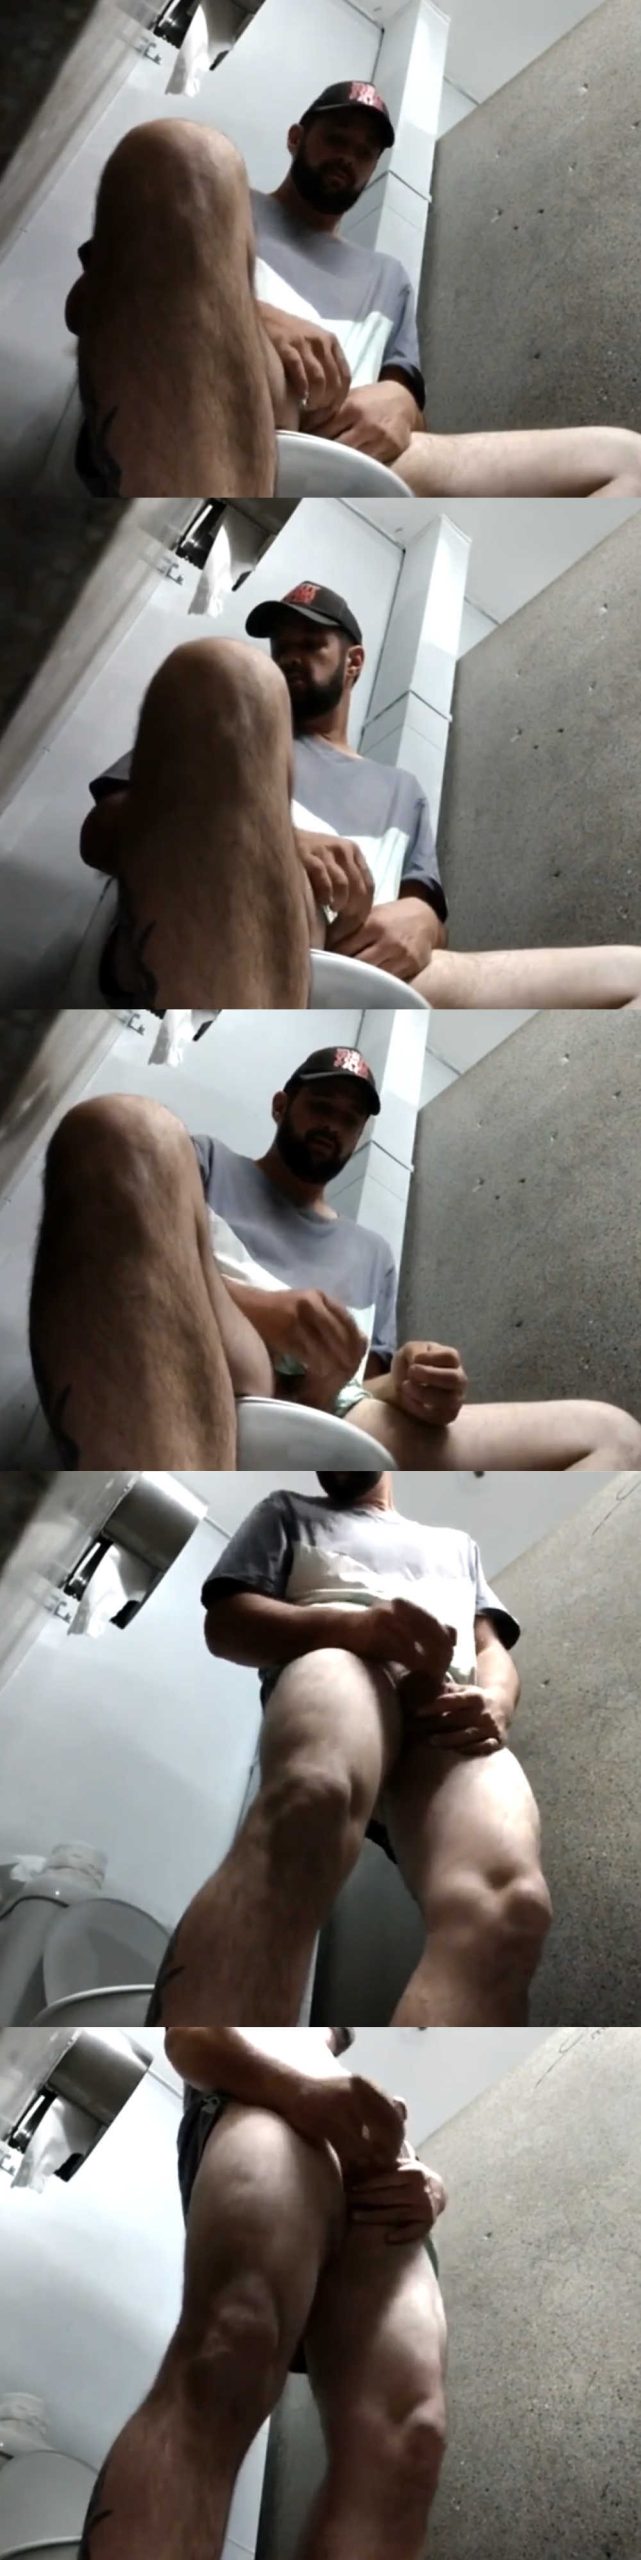 horny hairy stud caught wanking in public toilet